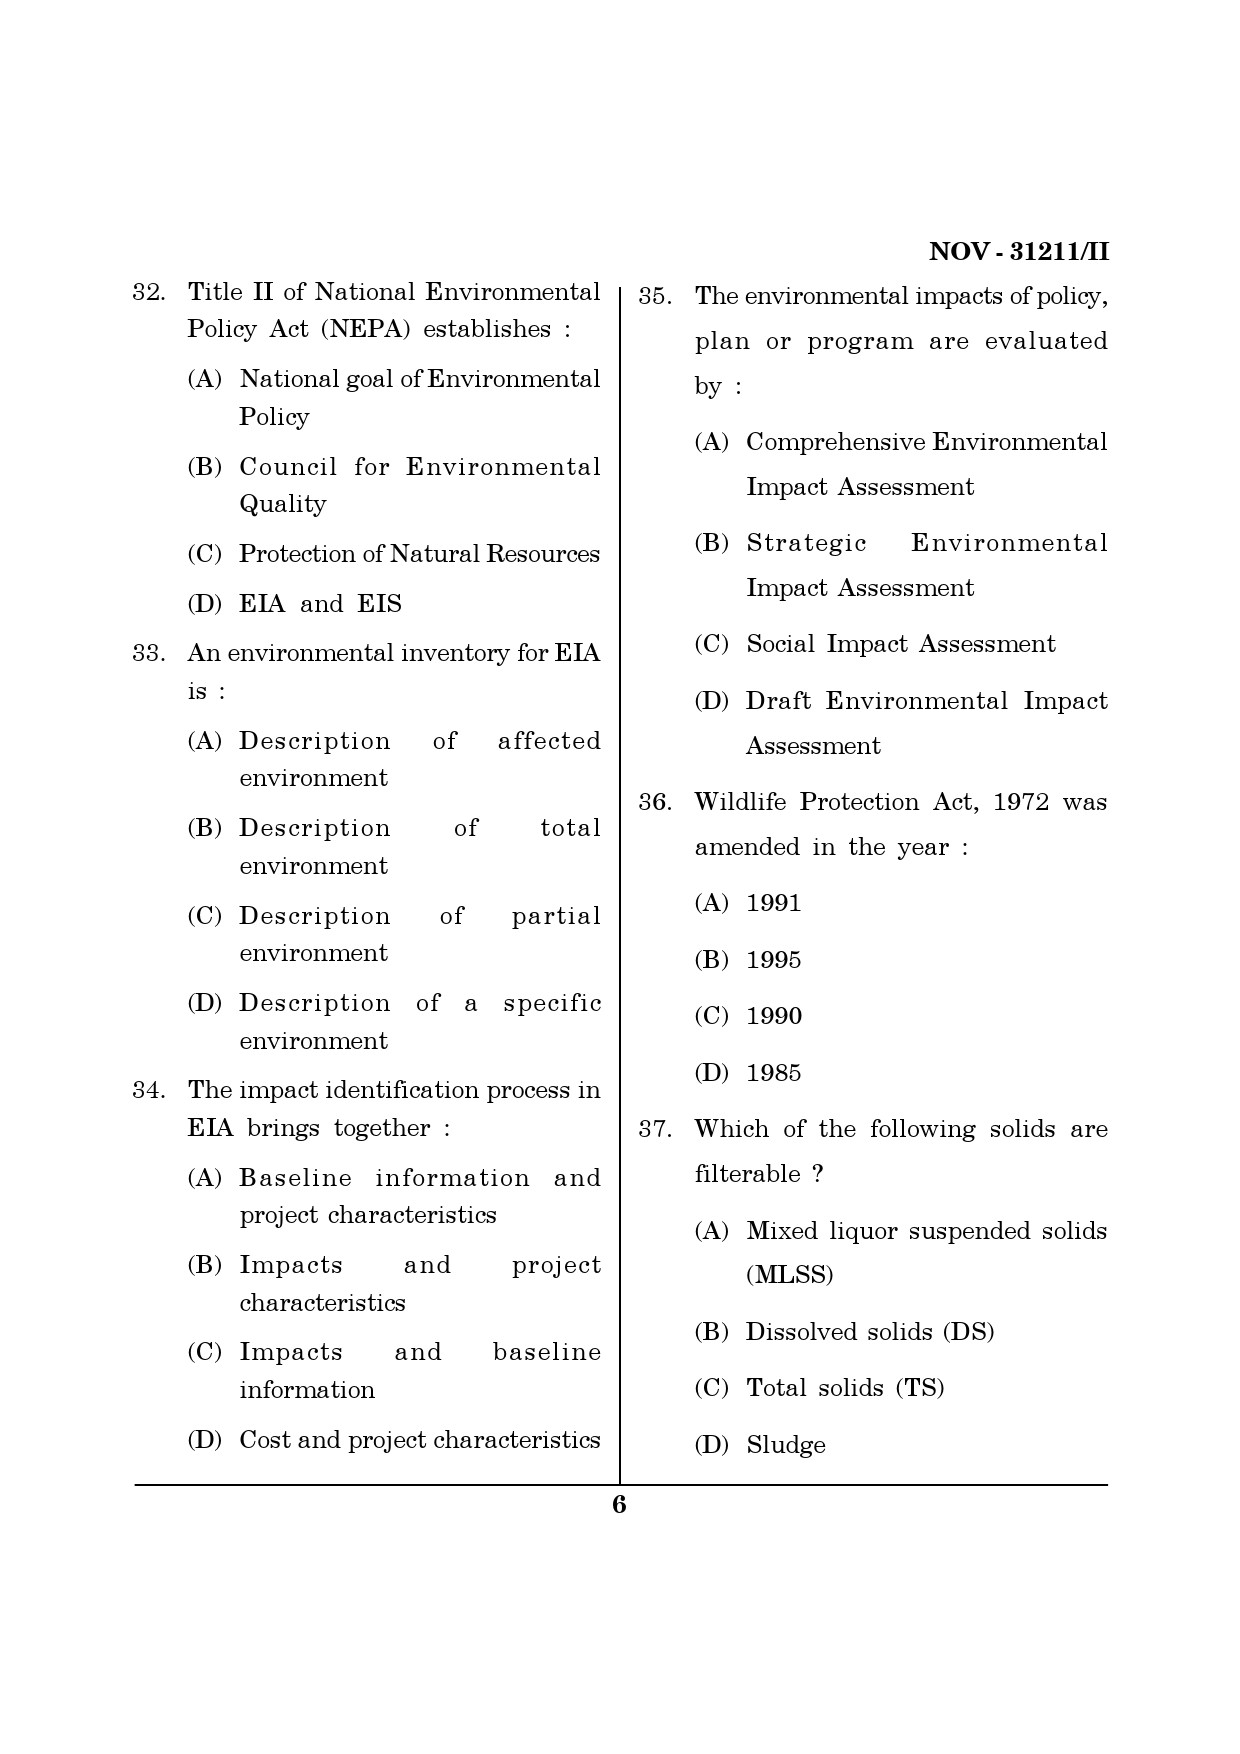 Maharashtra SET Environmental Sciences Question Paper II November 2011 6